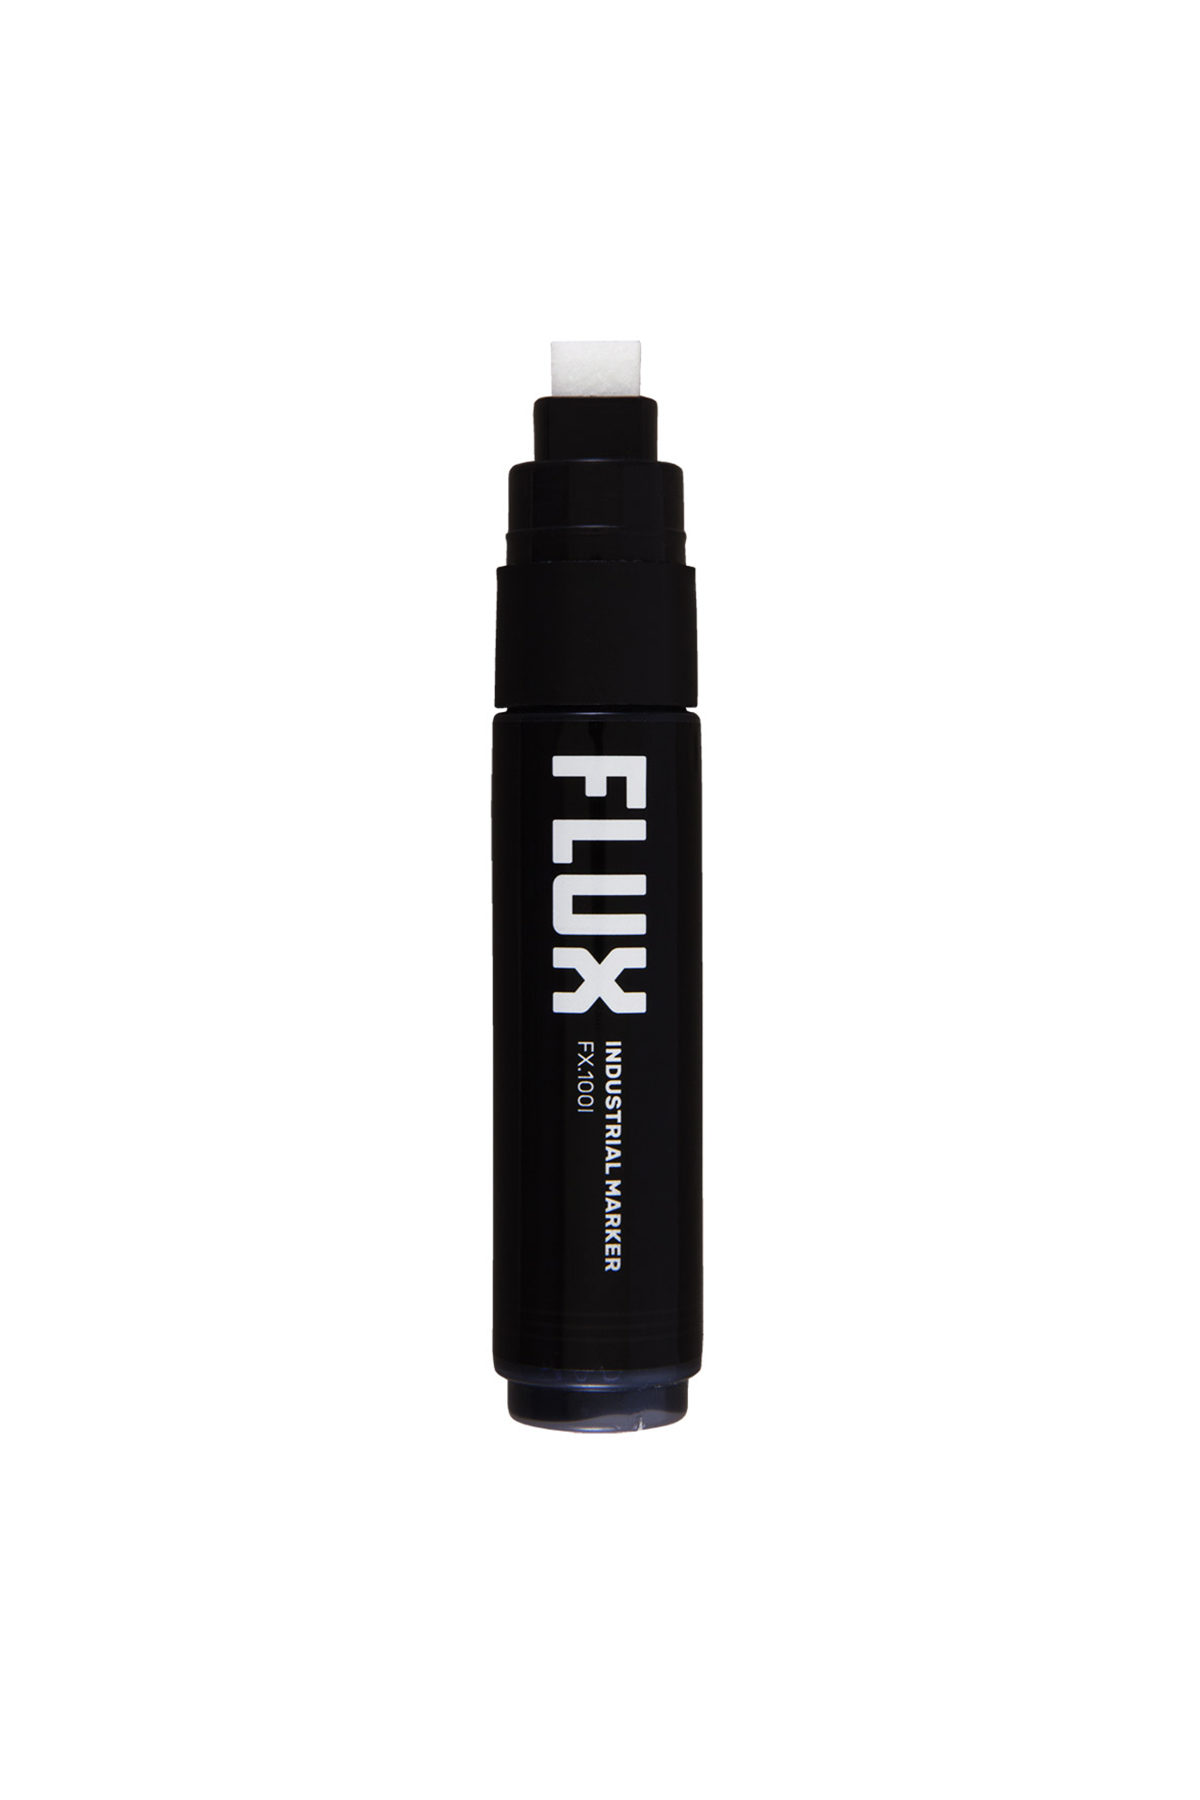 Flux INDUSTRIAL Marker 10mm